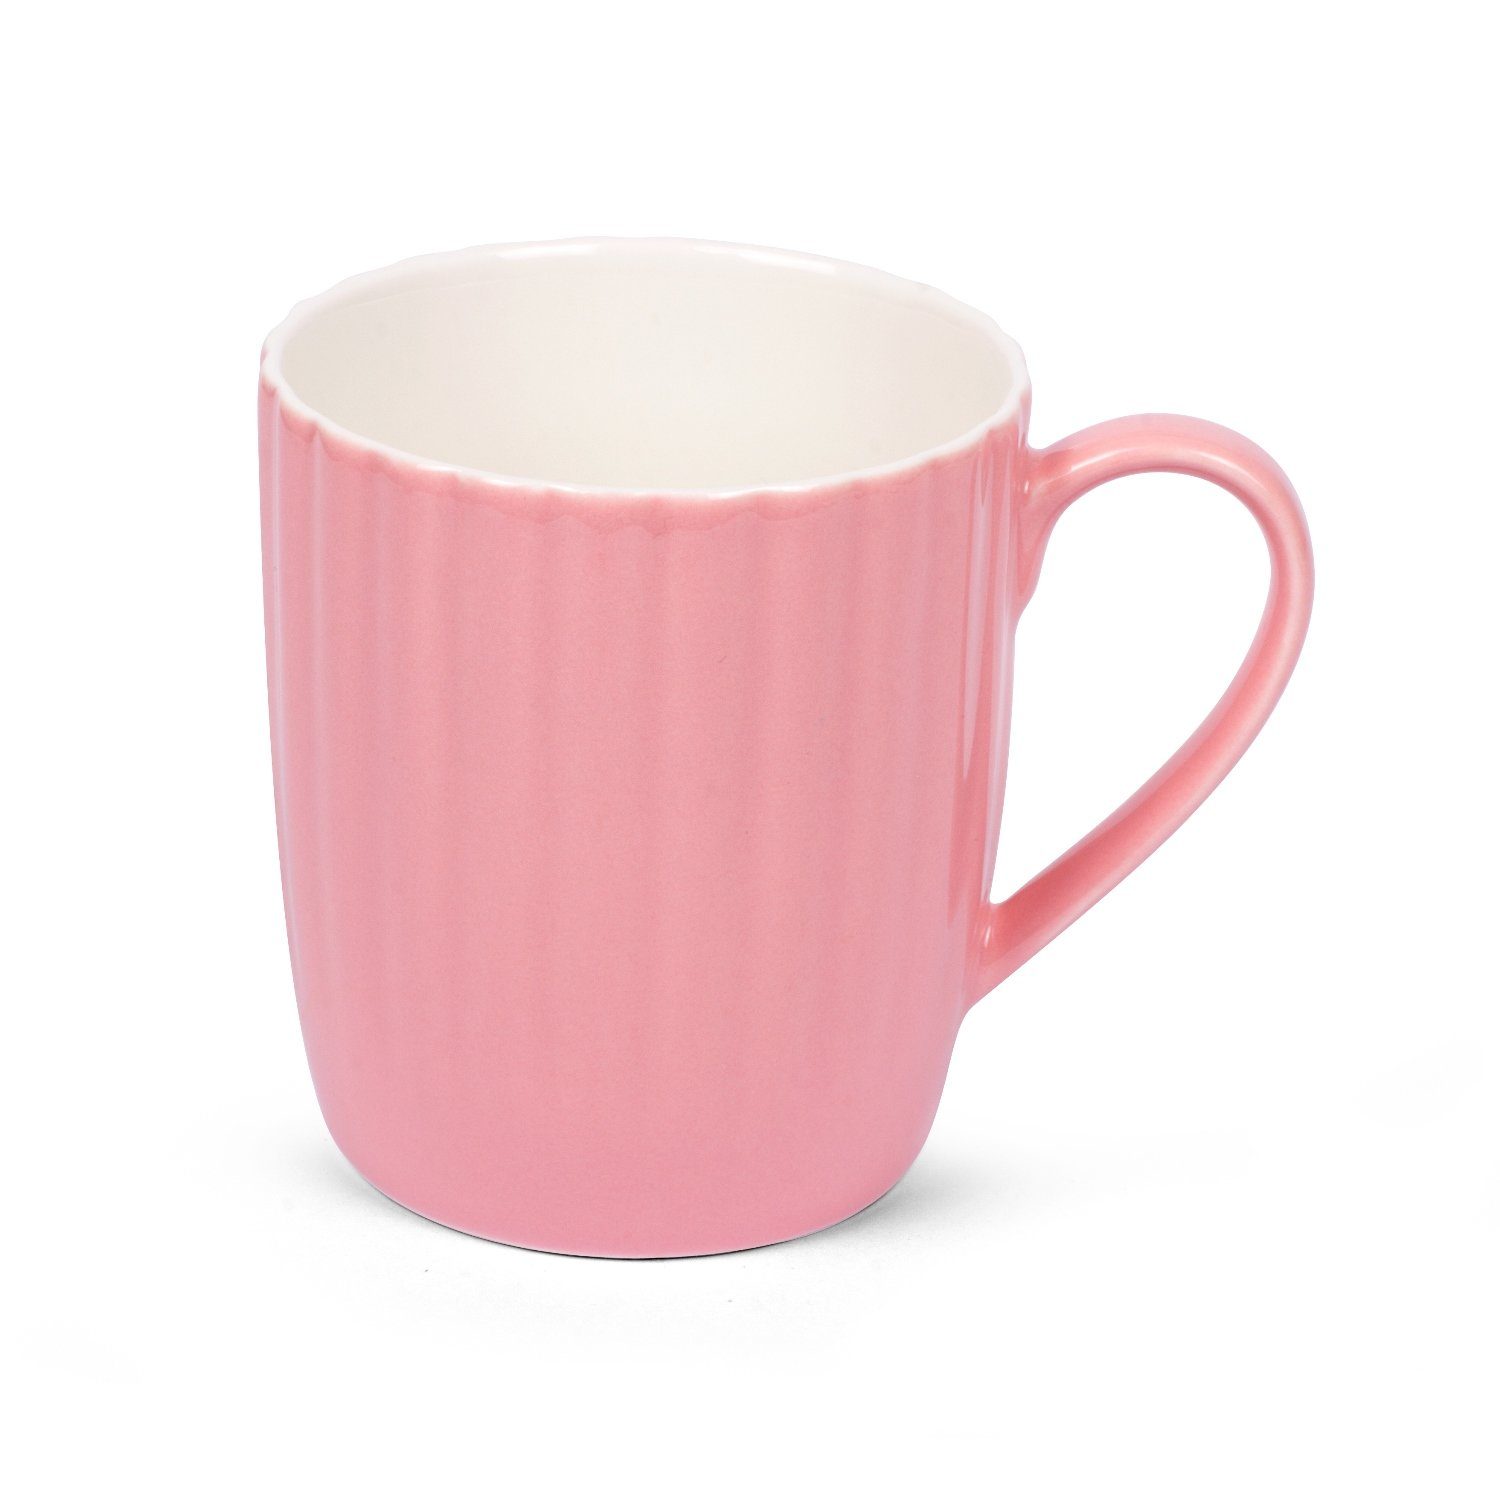 Geschenkset Up - Cupcake, Thumbs - Home Keramik, Tasse Socke Pusheen mit Pink Tasse